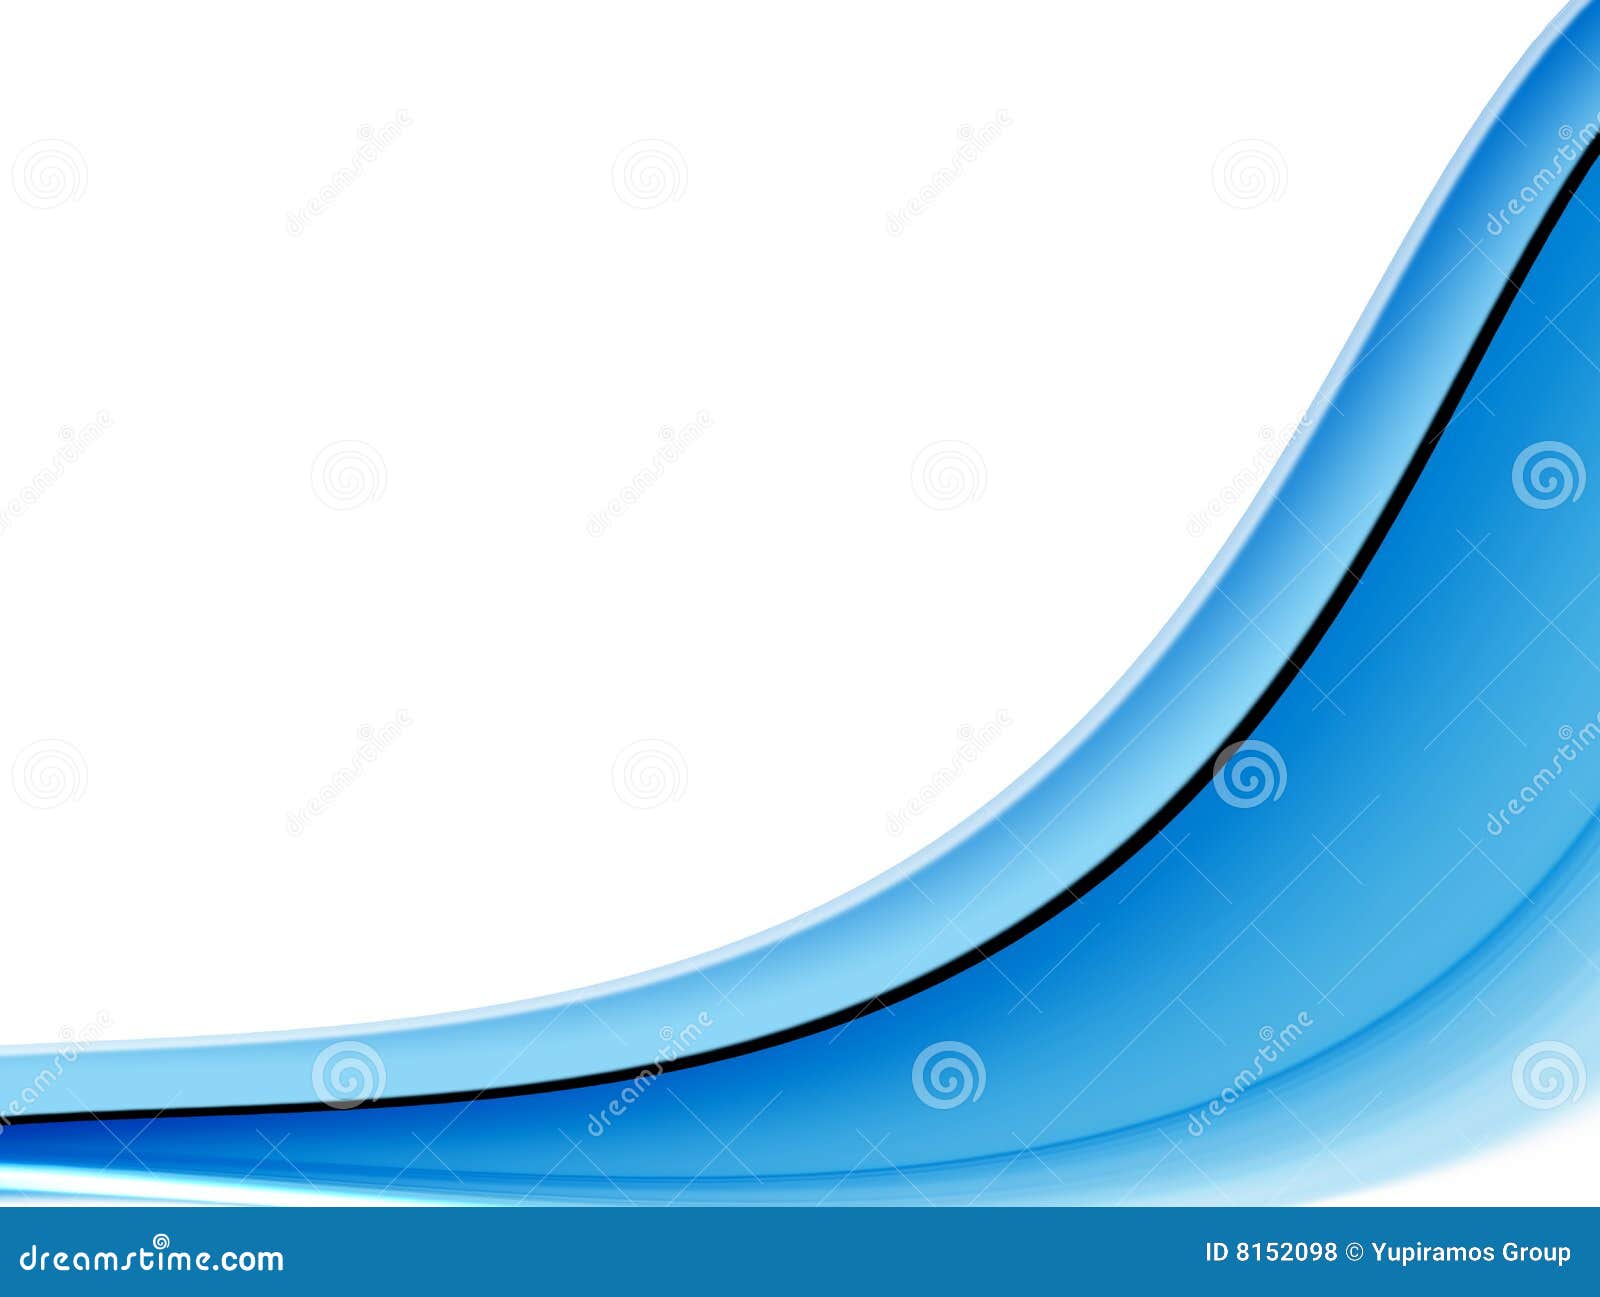 Blue wave background stock illustration. Illustration of background